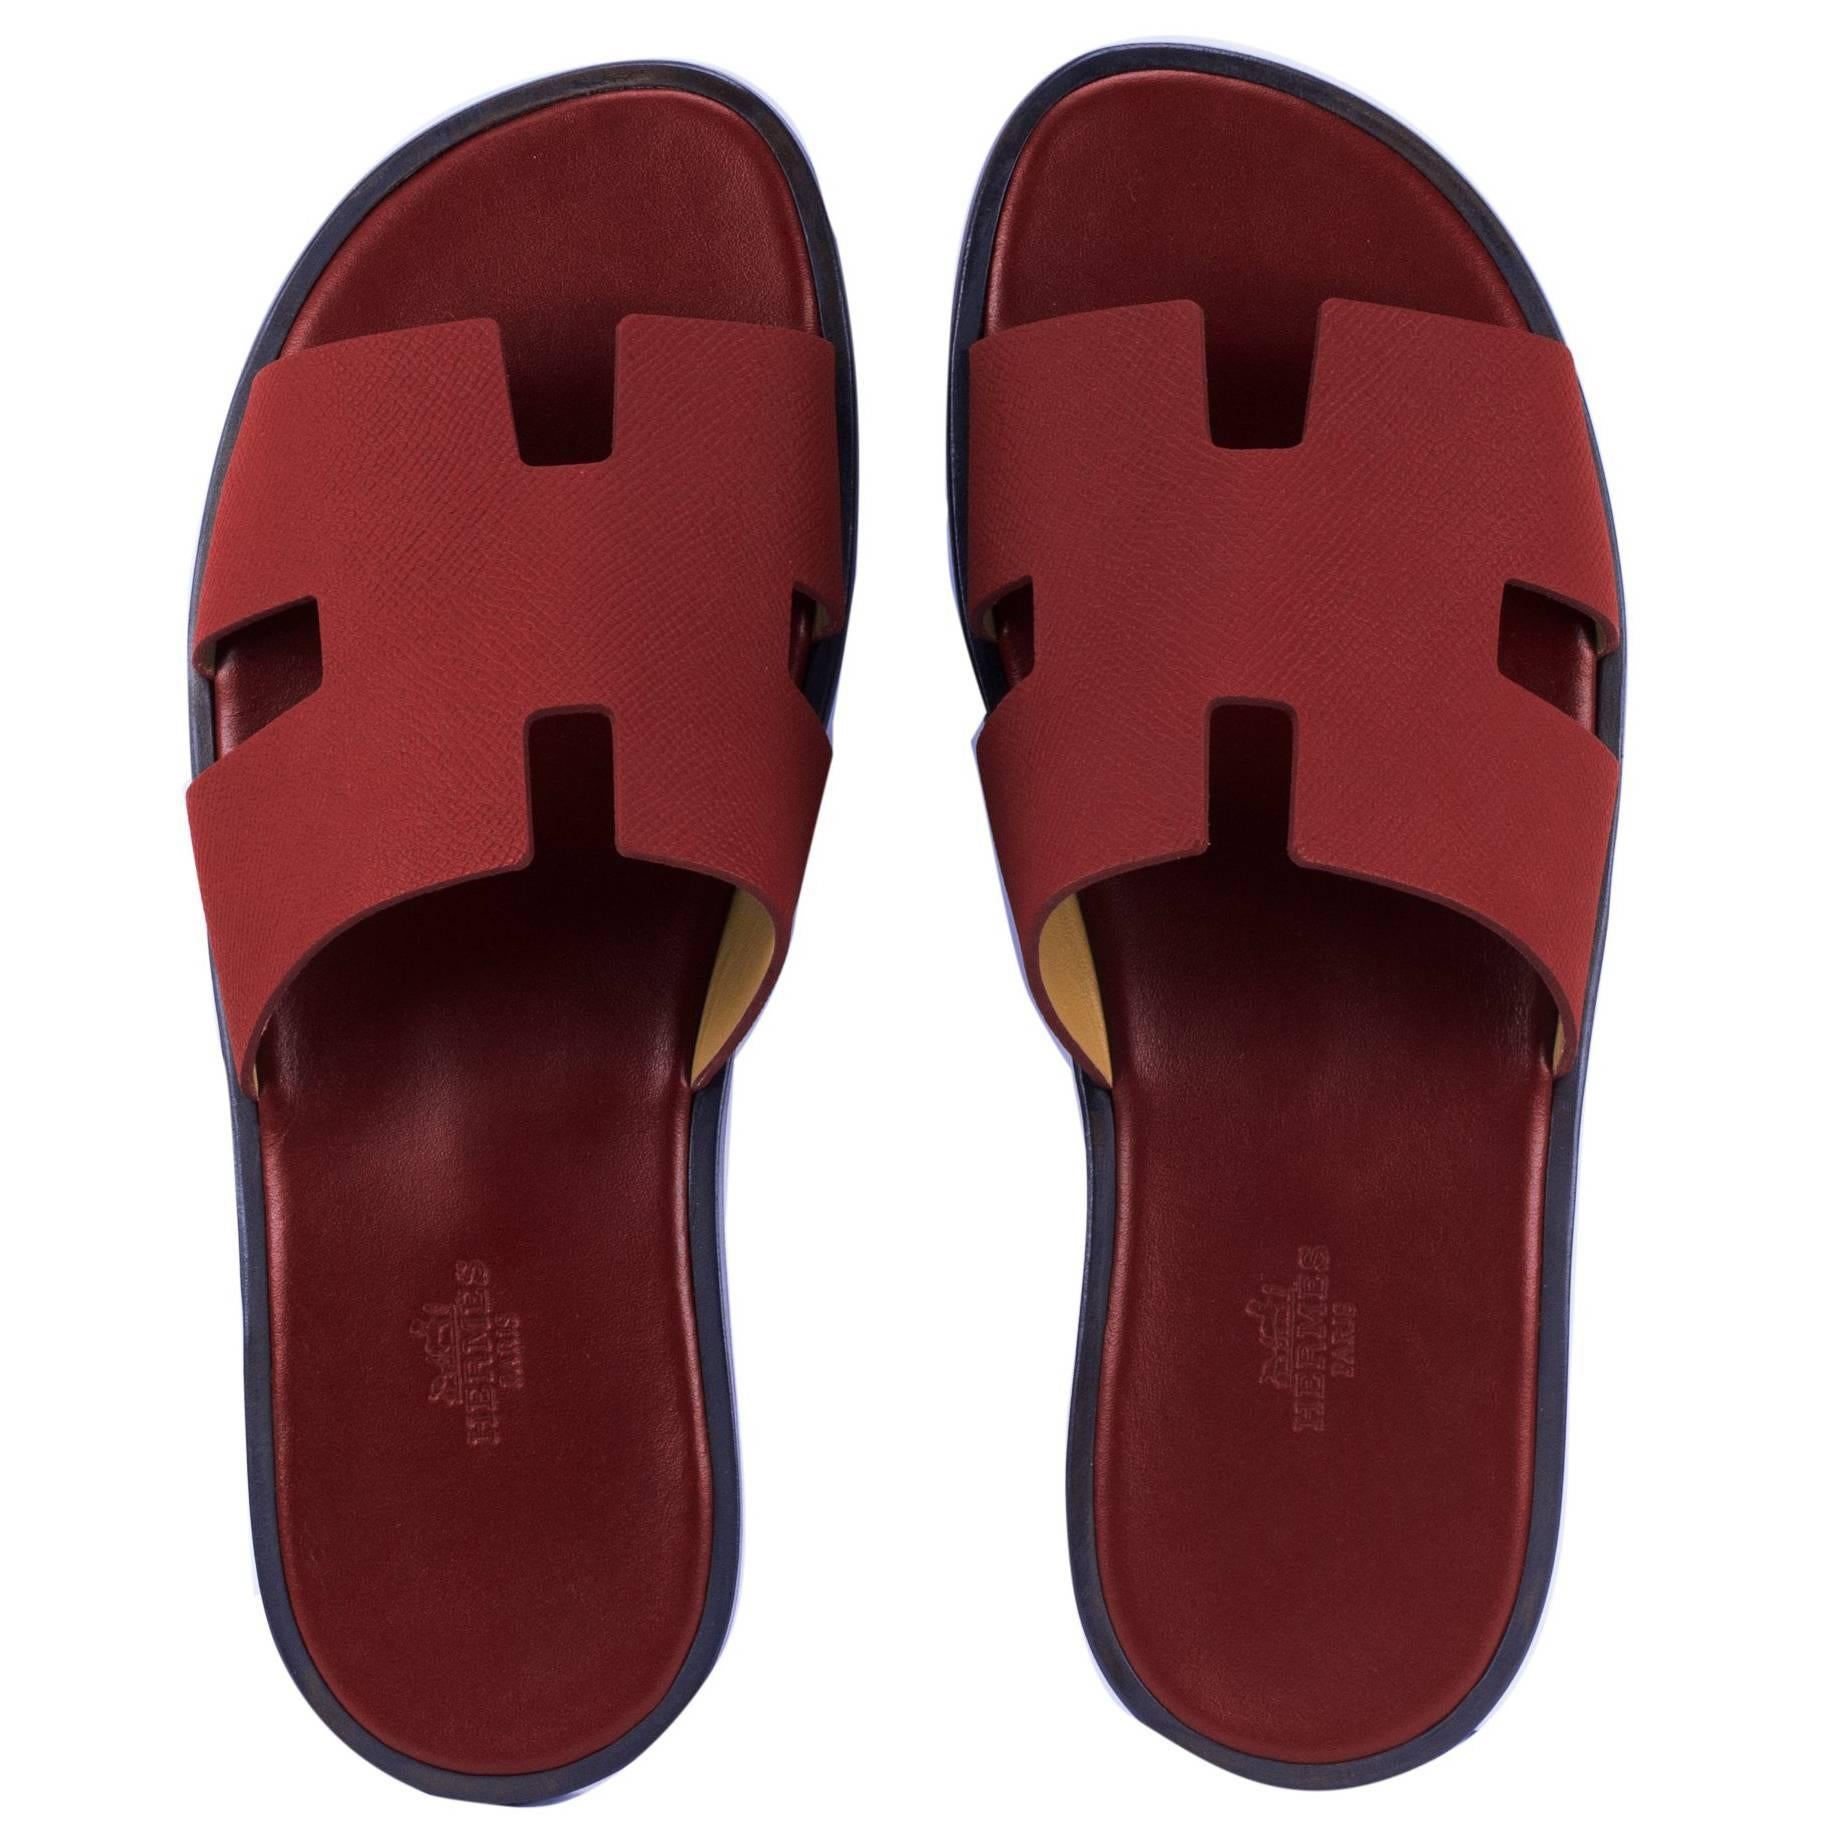 Hermes sandale "Izmir" Epsom Leather Red Color Size 42 2017 For Sale